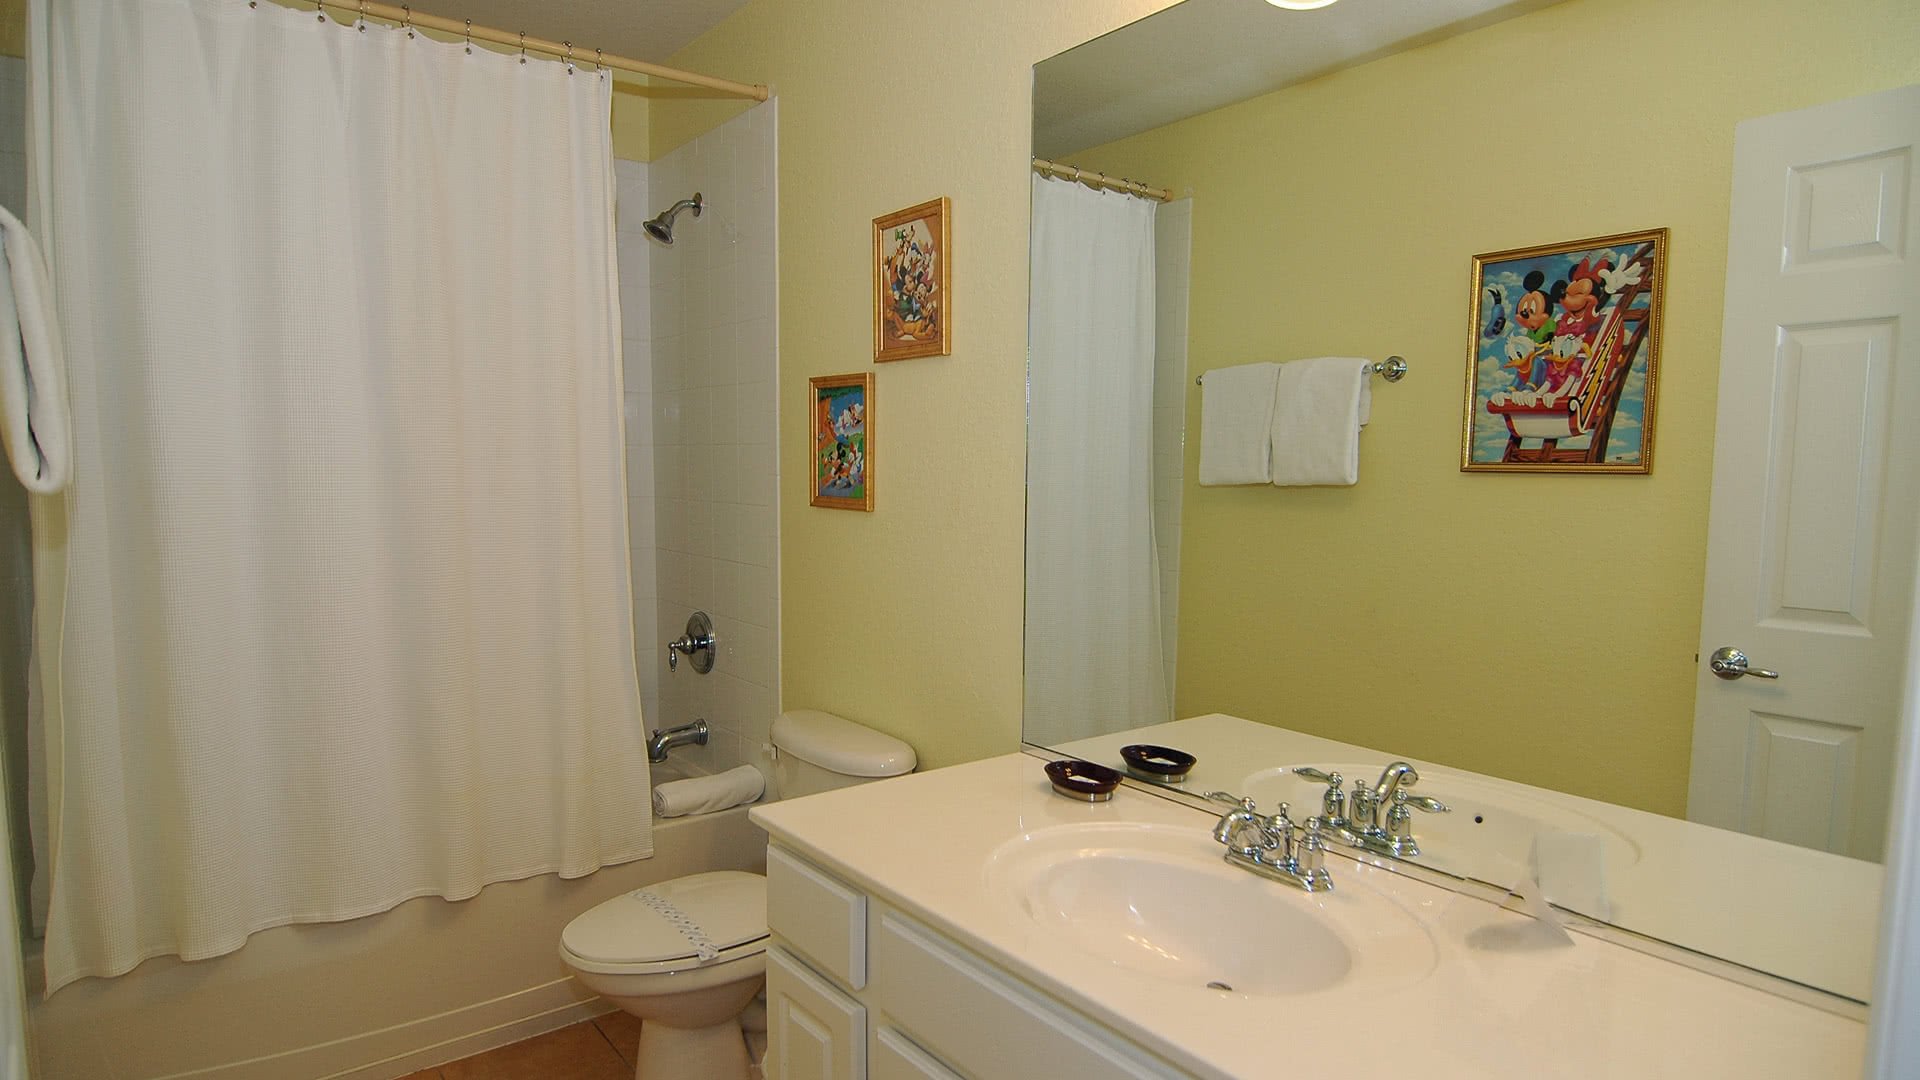 Two Twins Bathroom 5
Tub/Shower Combo